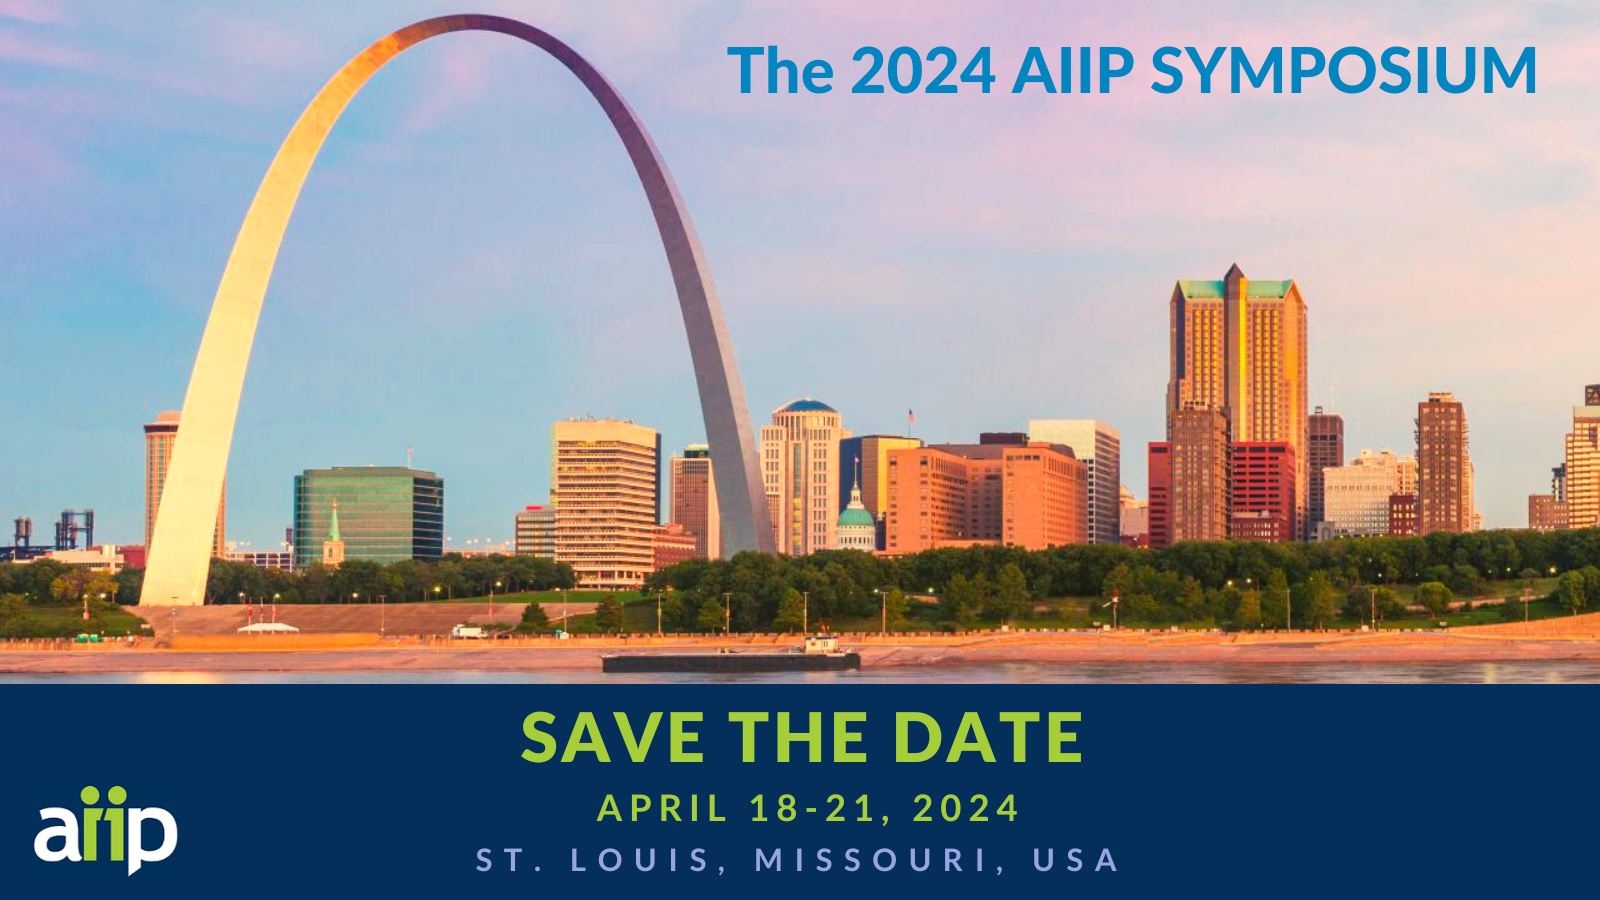 Save the date - 2024 AIIP Symposium, April 18-21, 2024 in St. Louis, Missouri